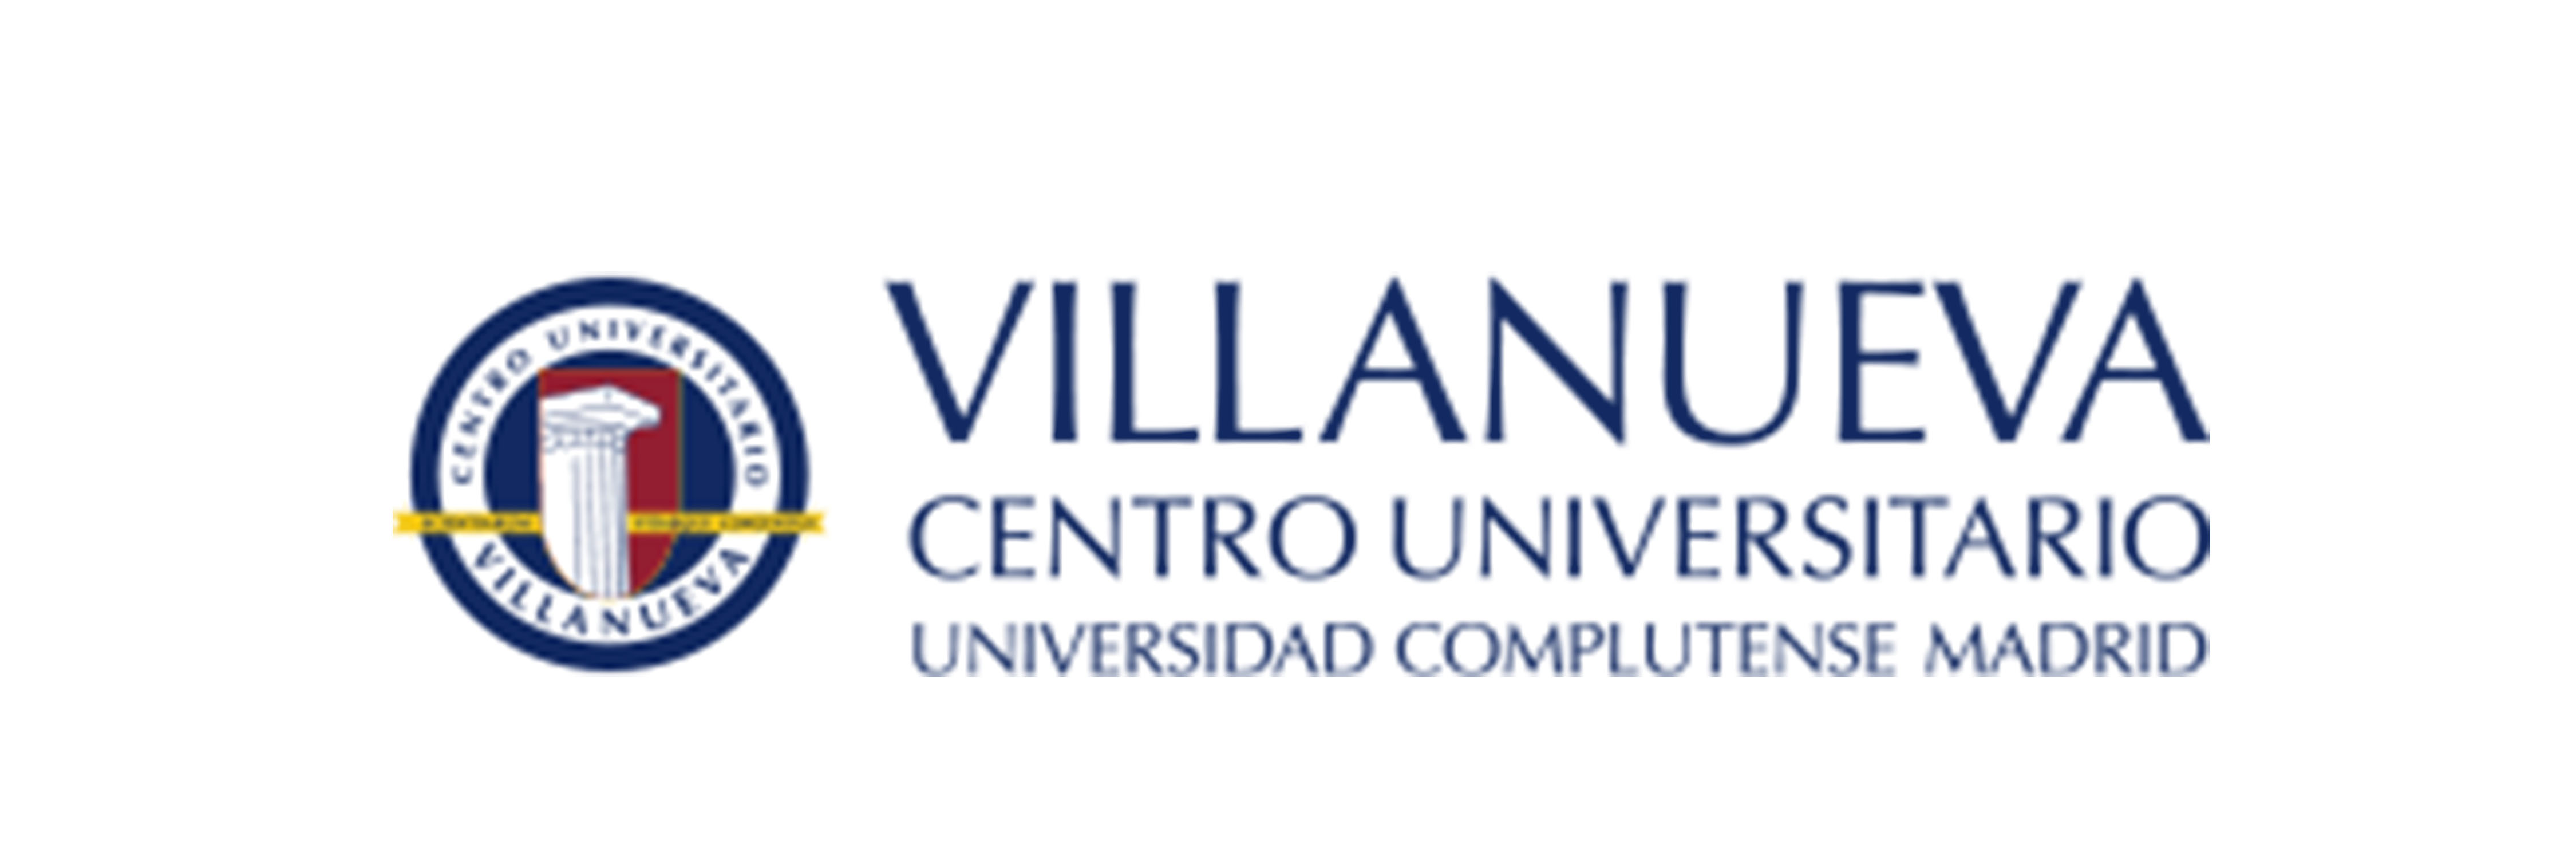 Universidad Villanueva